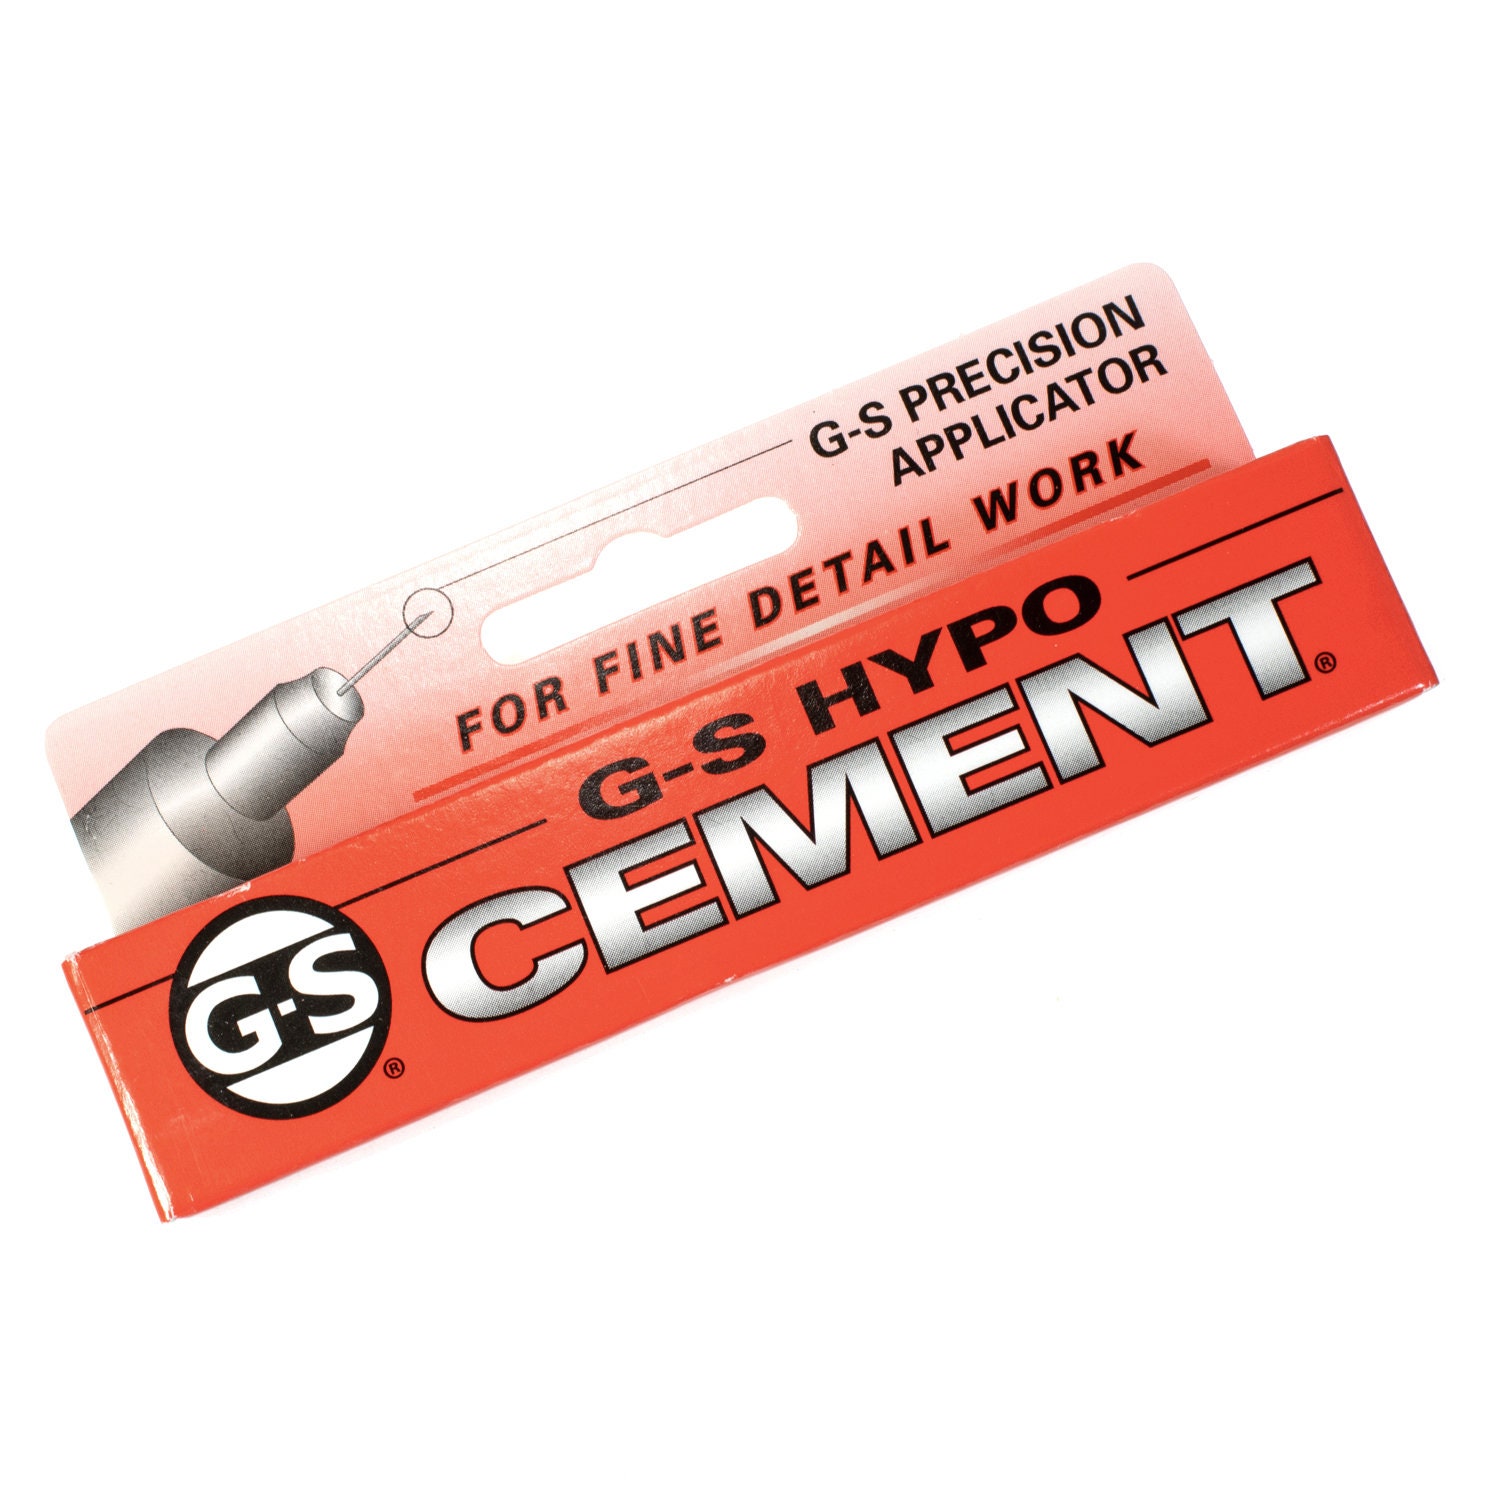 G-S Hypo Cement Jewelry Glue